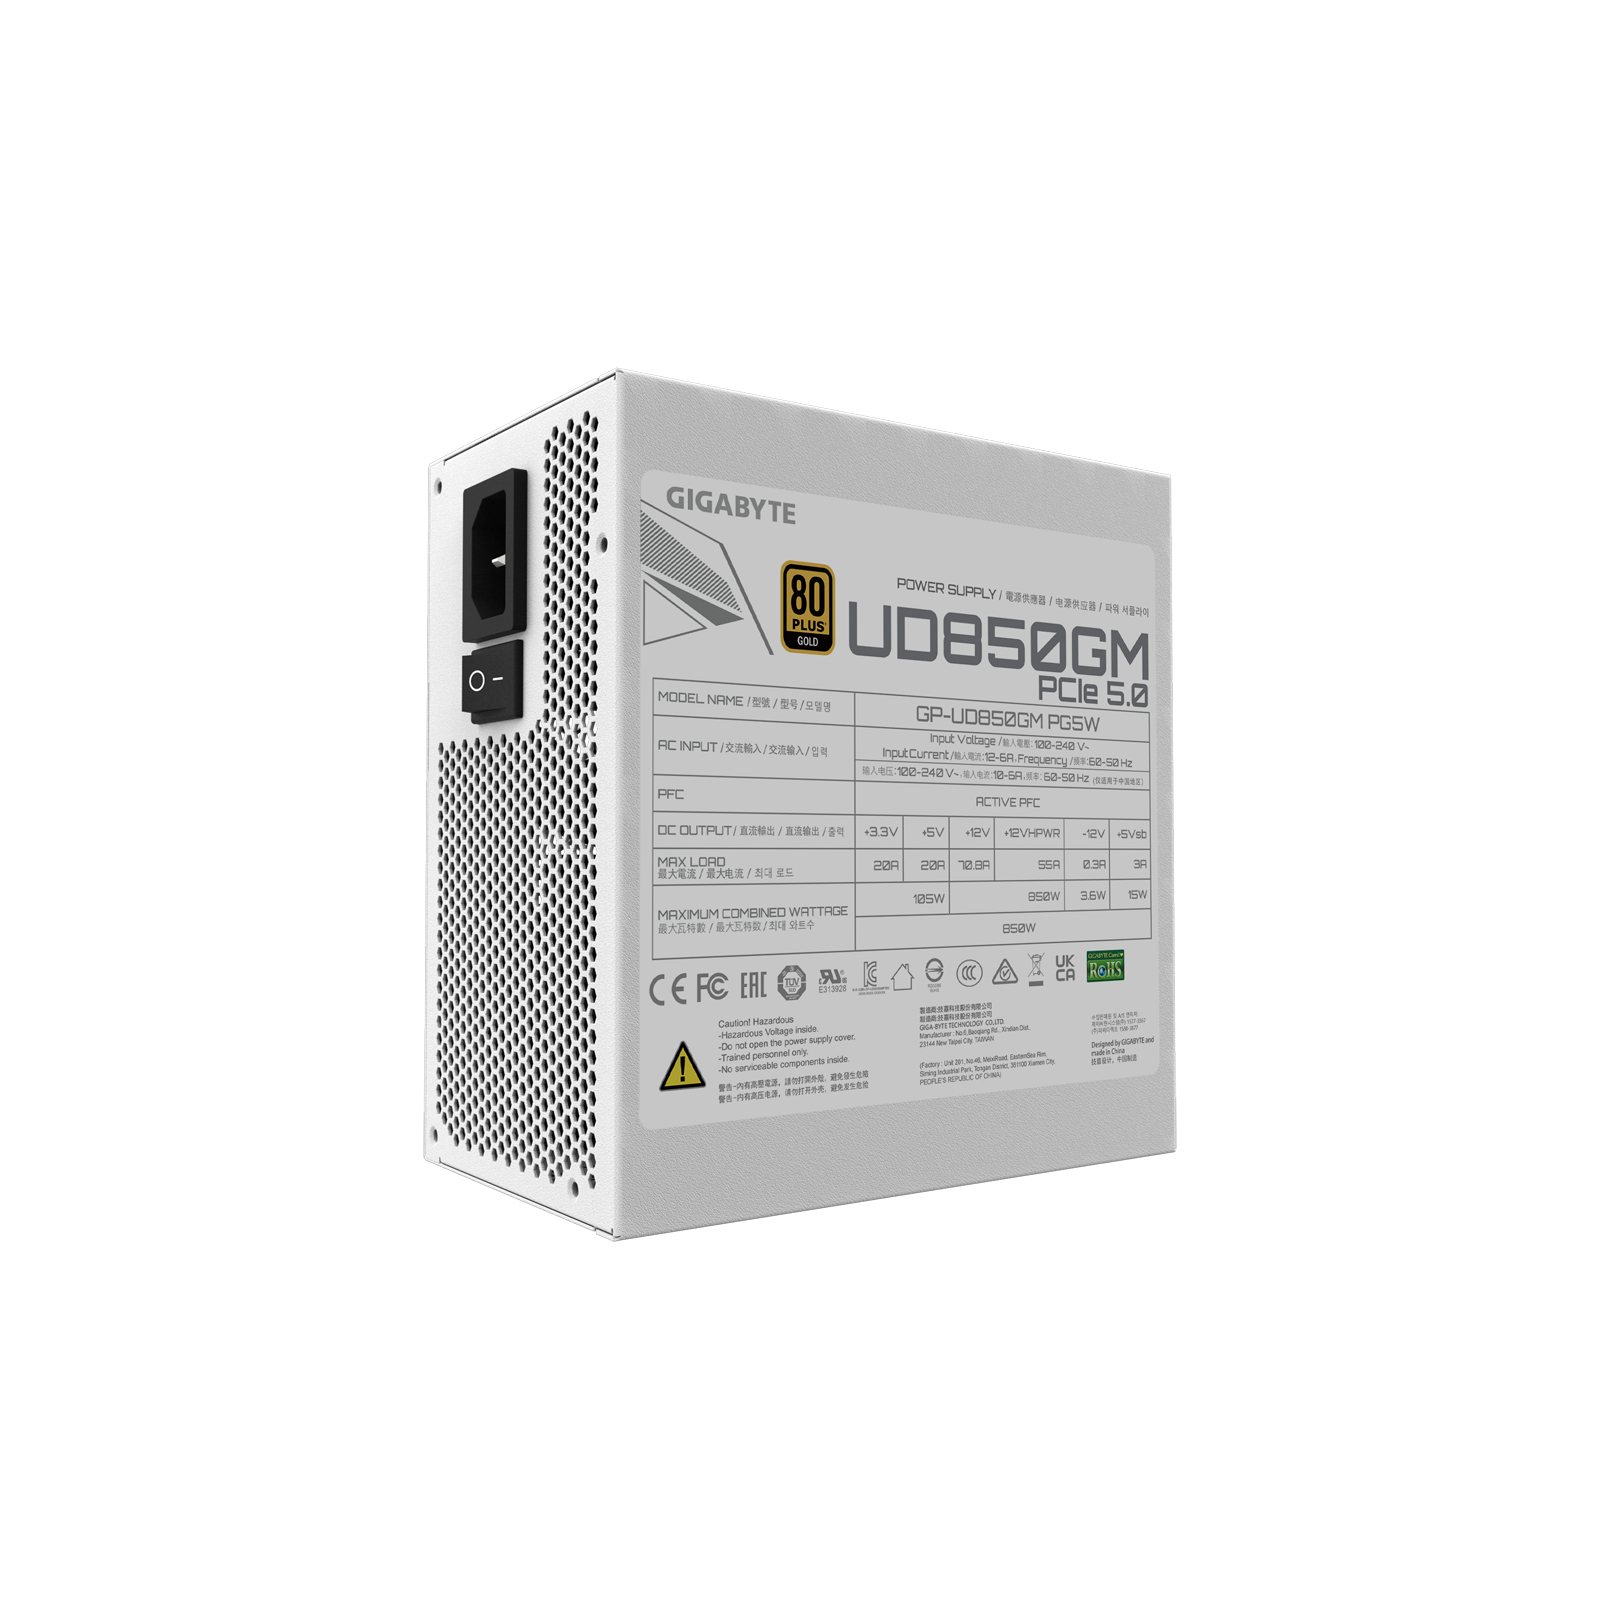 Блок питания GIGABYTE 850W (GP-UD850GM PG5W) изображение 3